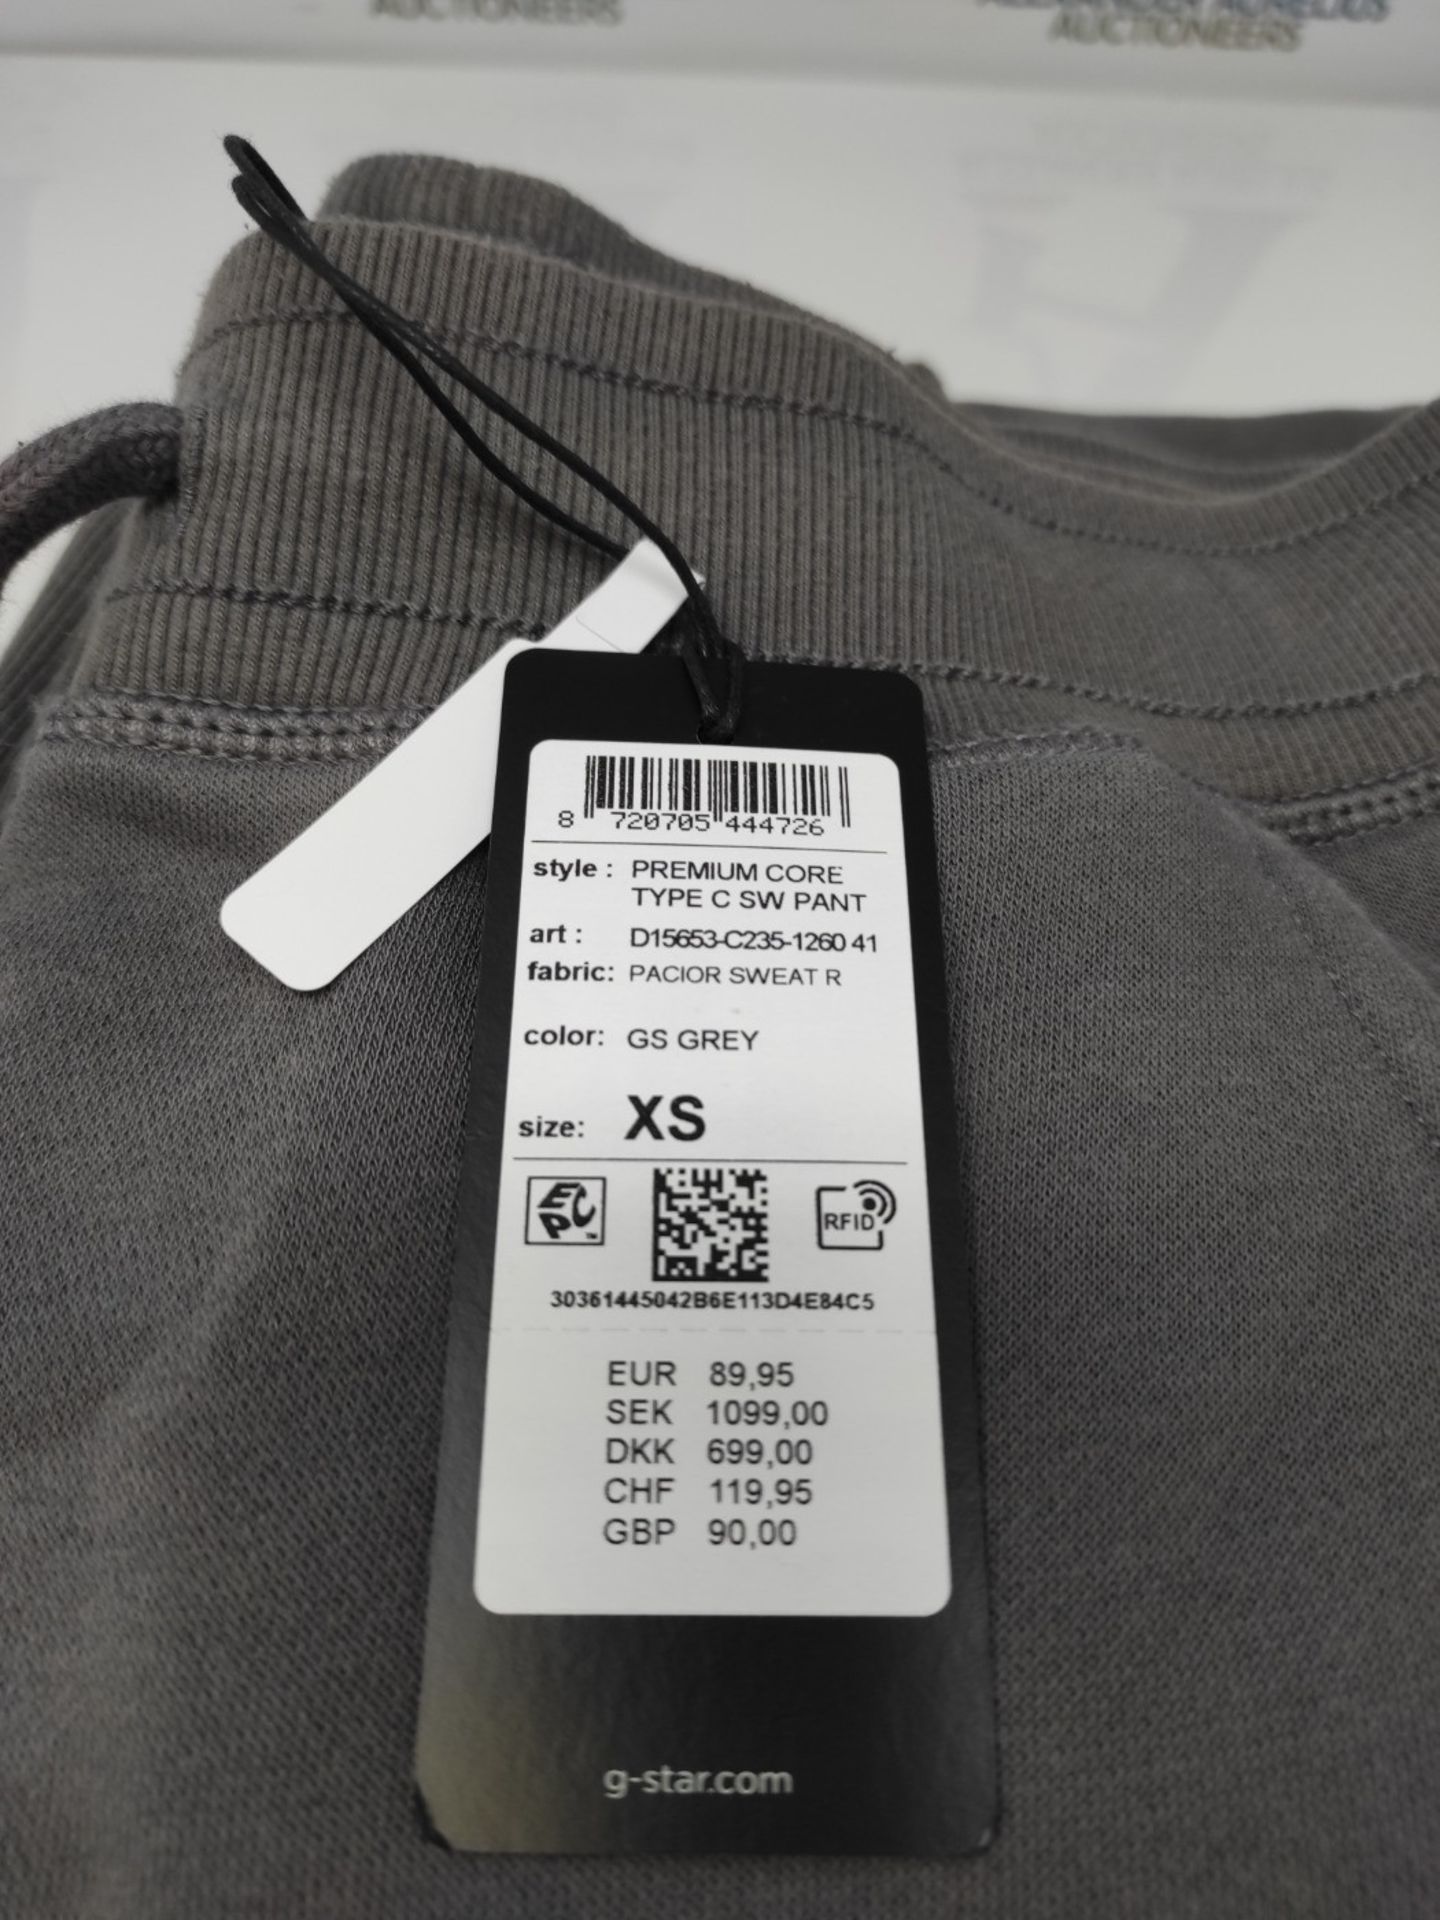 RRP £89.00 G-STAR RAW Premium Core Type C Men's Sweatpants, Grey (gs grey D15653-C235-1260), XS - Image 3 of 3